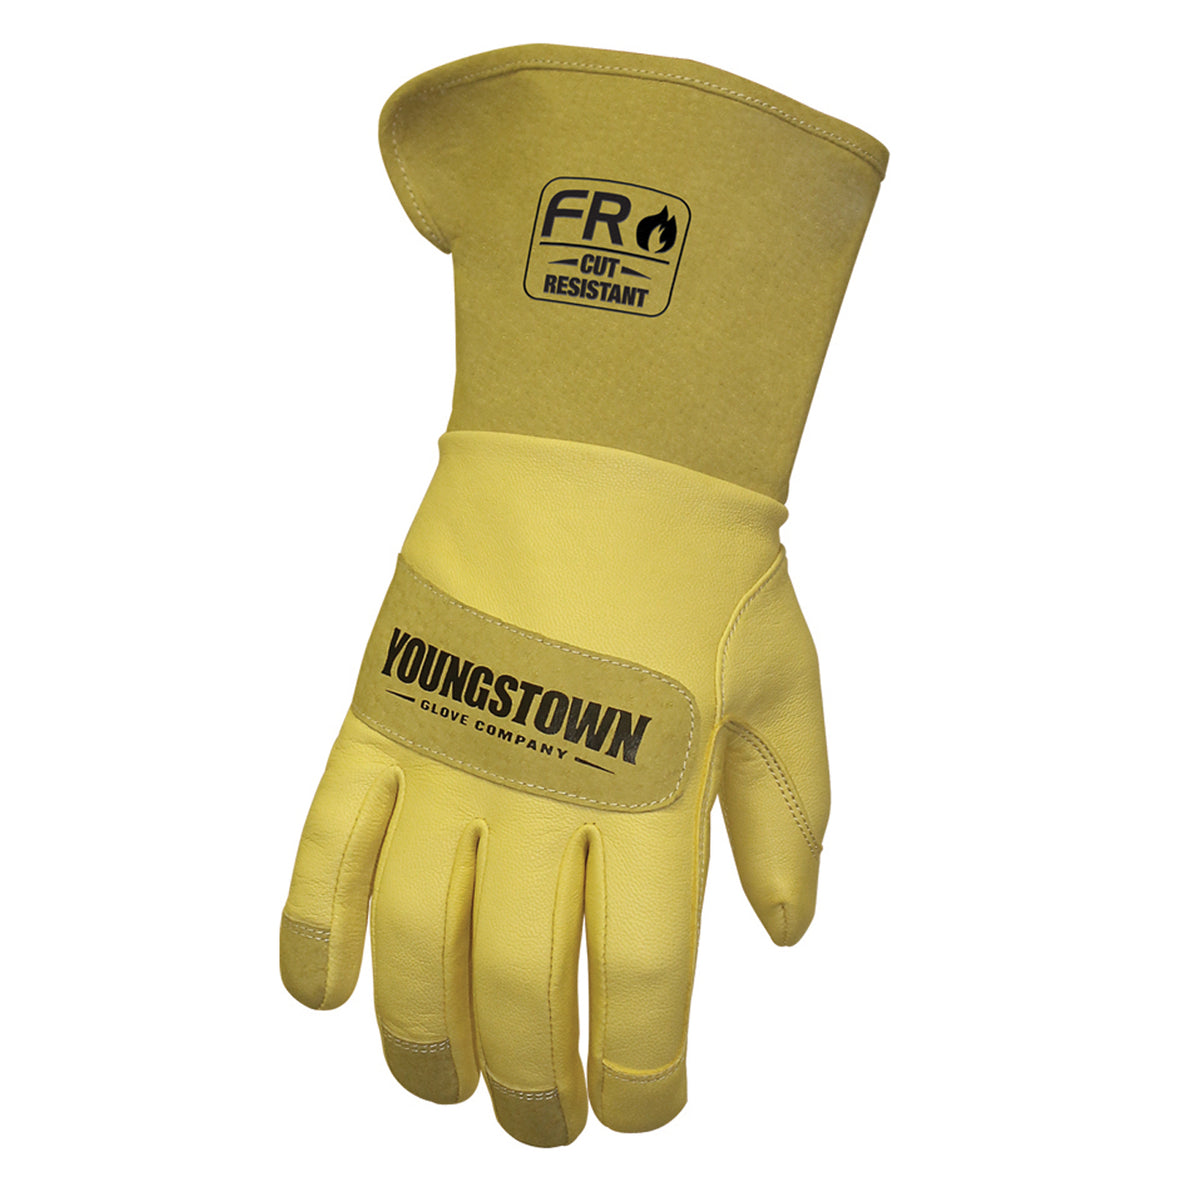 Youngstown Glove Co Mechanics Gloves,Leather,Blk/Tan,L,PR 12-3270-80-L